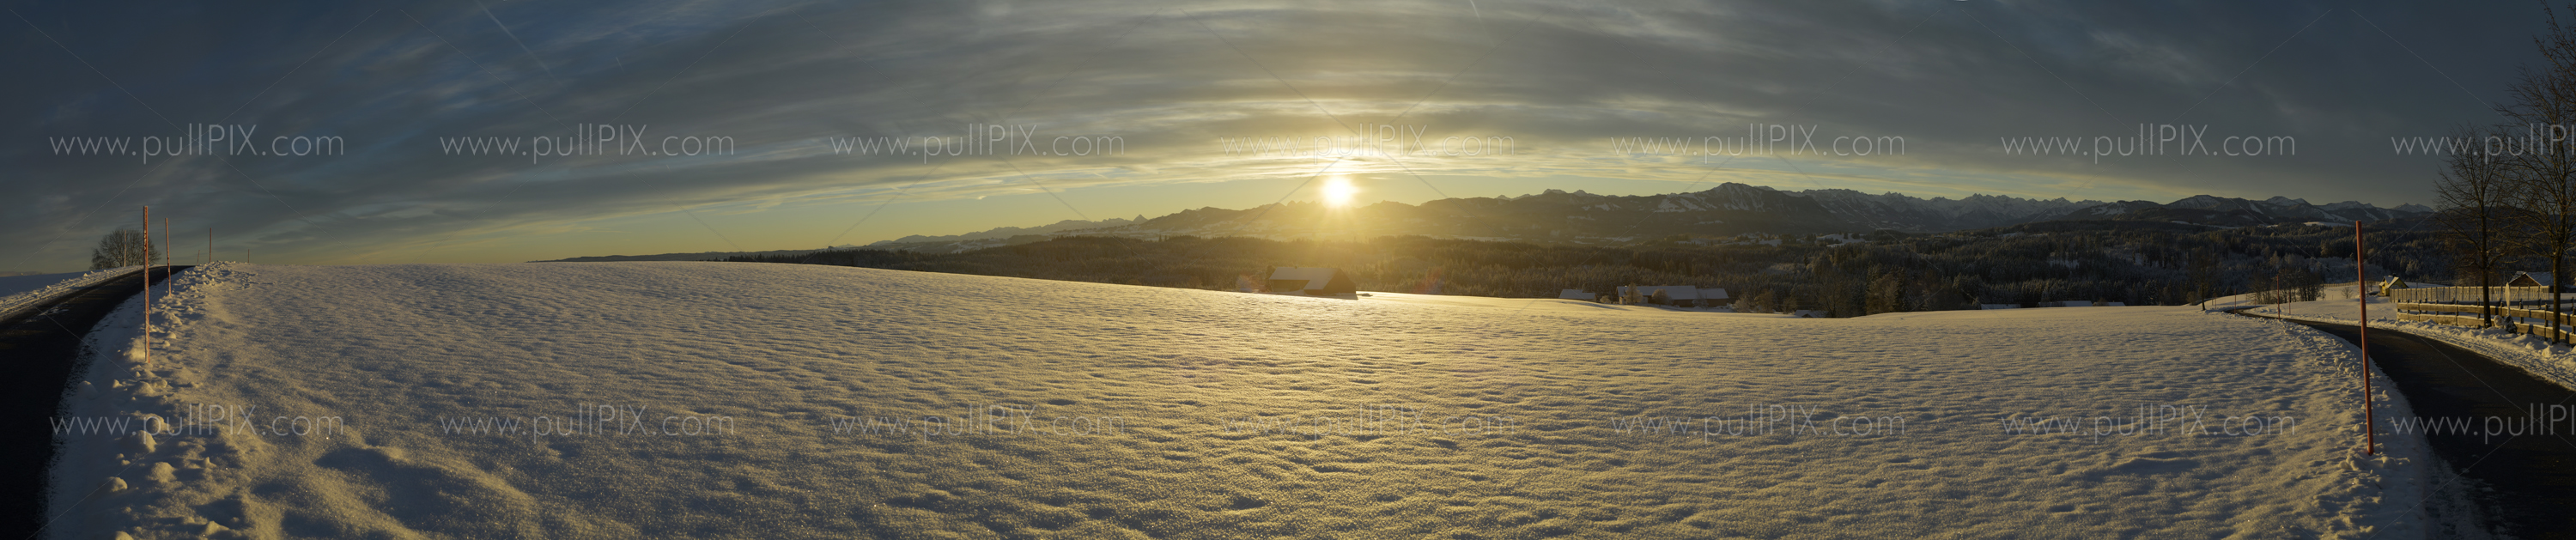 Preview sonnenaufgang im schnee 2.jpg